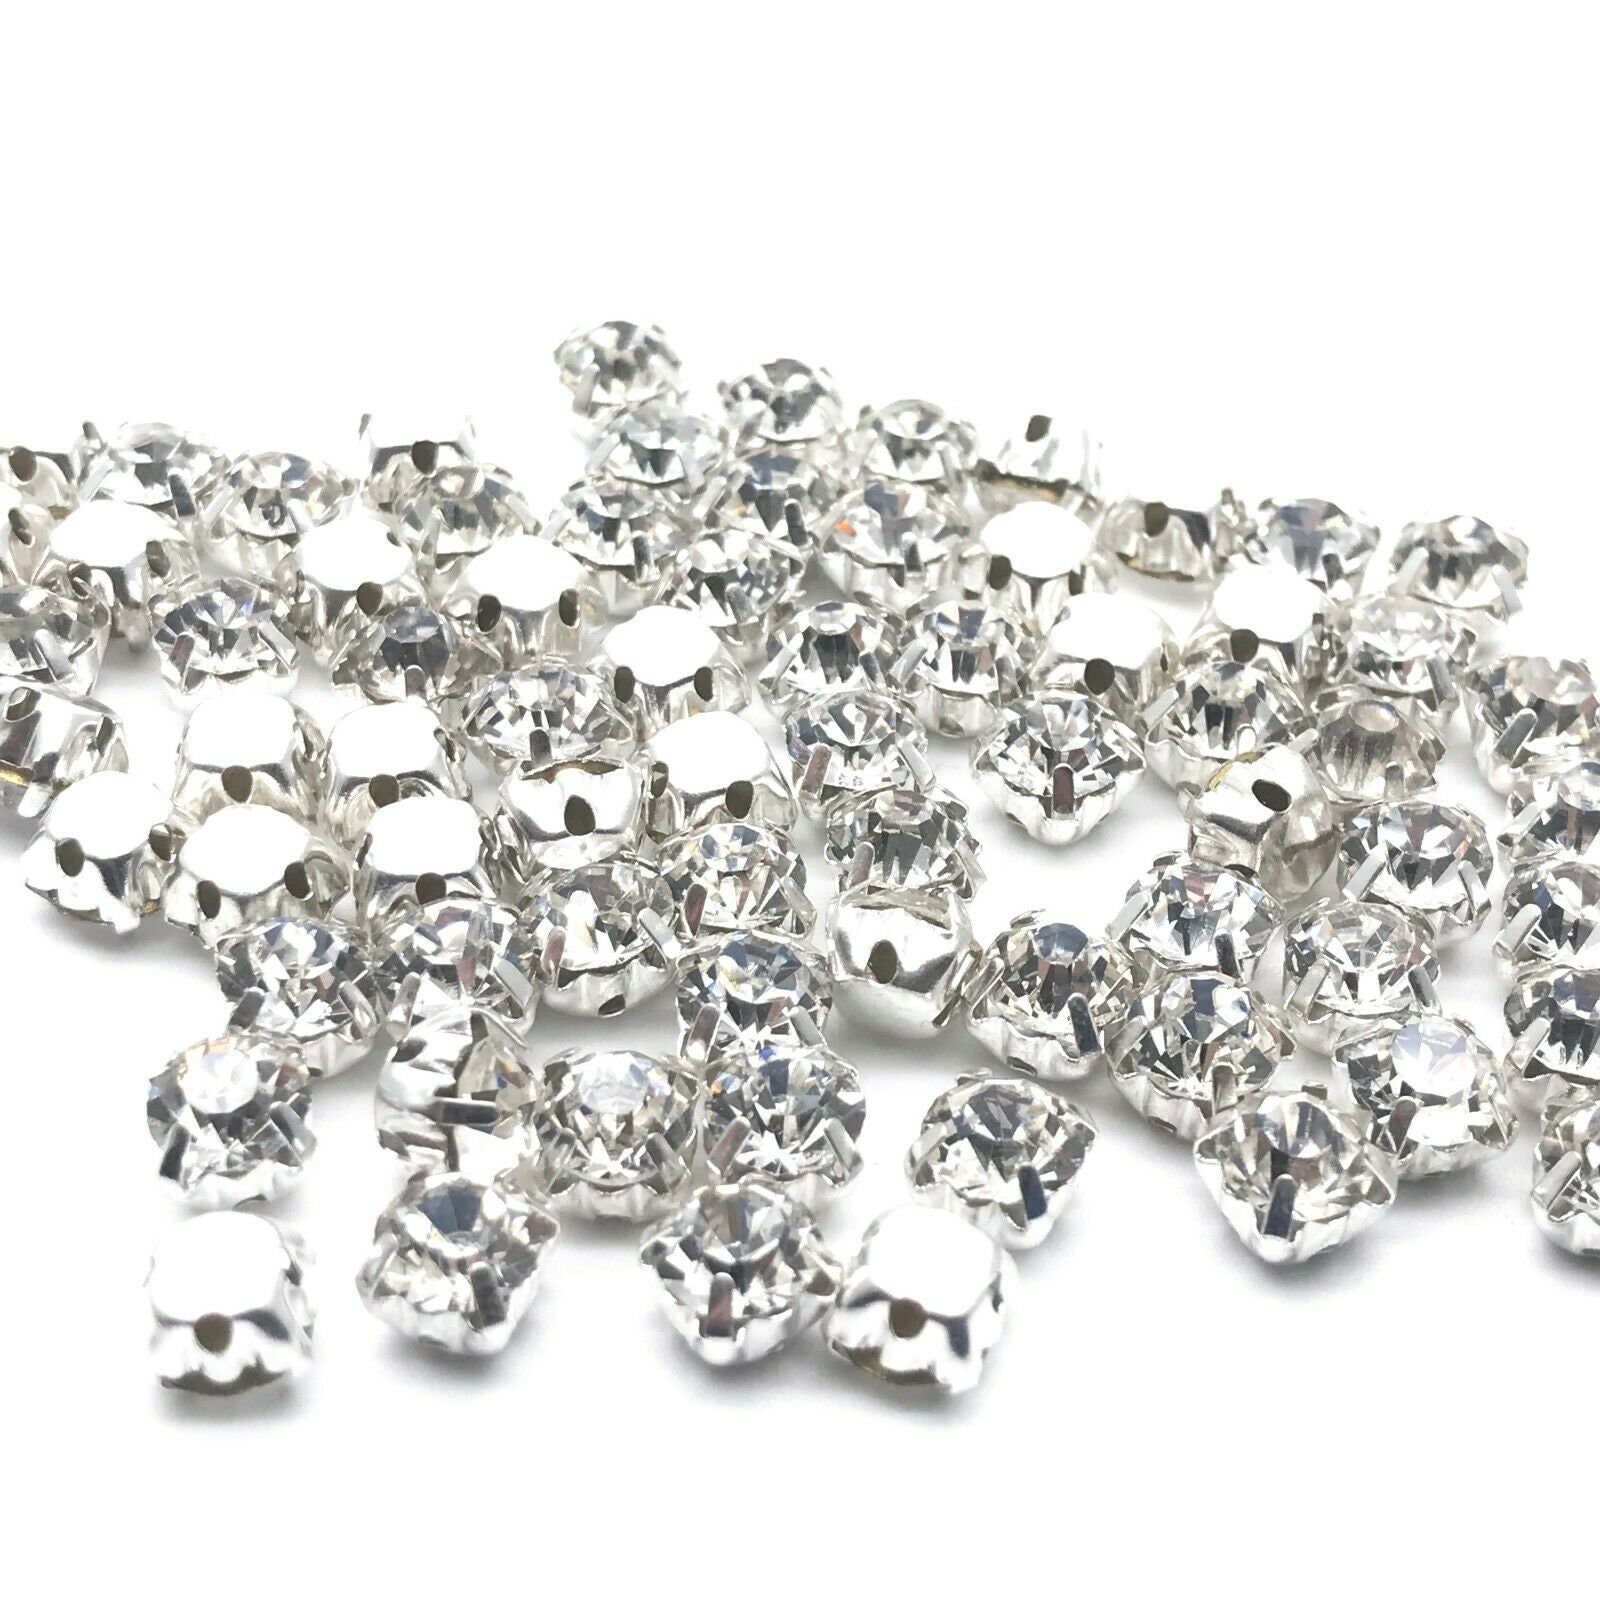 Metallic Grey Crystal Flat Back Rhinestones Mineral Grey Loose Flatback  Rhinestone Glass Crystals Beads 2mm 3mm 4mm 5mm 6mm Mixed Sizes 